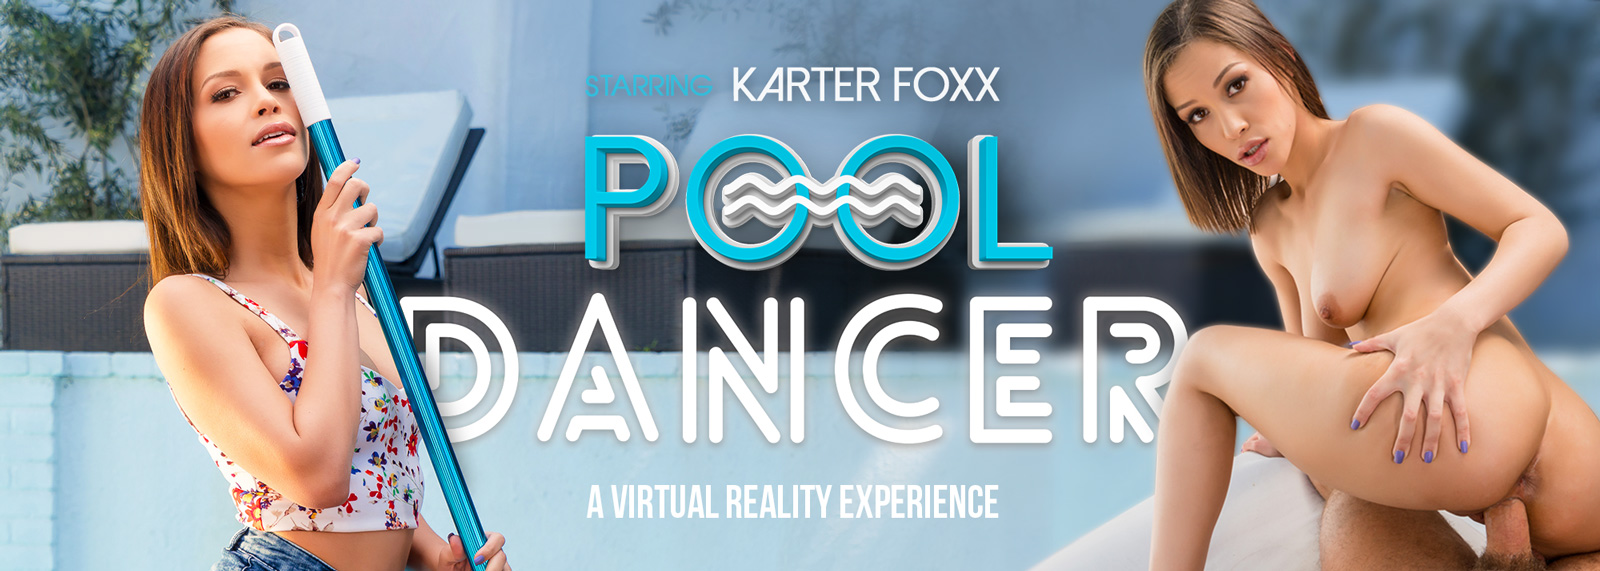 Pool Dancer - VR Porn Video, Starring: Karter Foxx